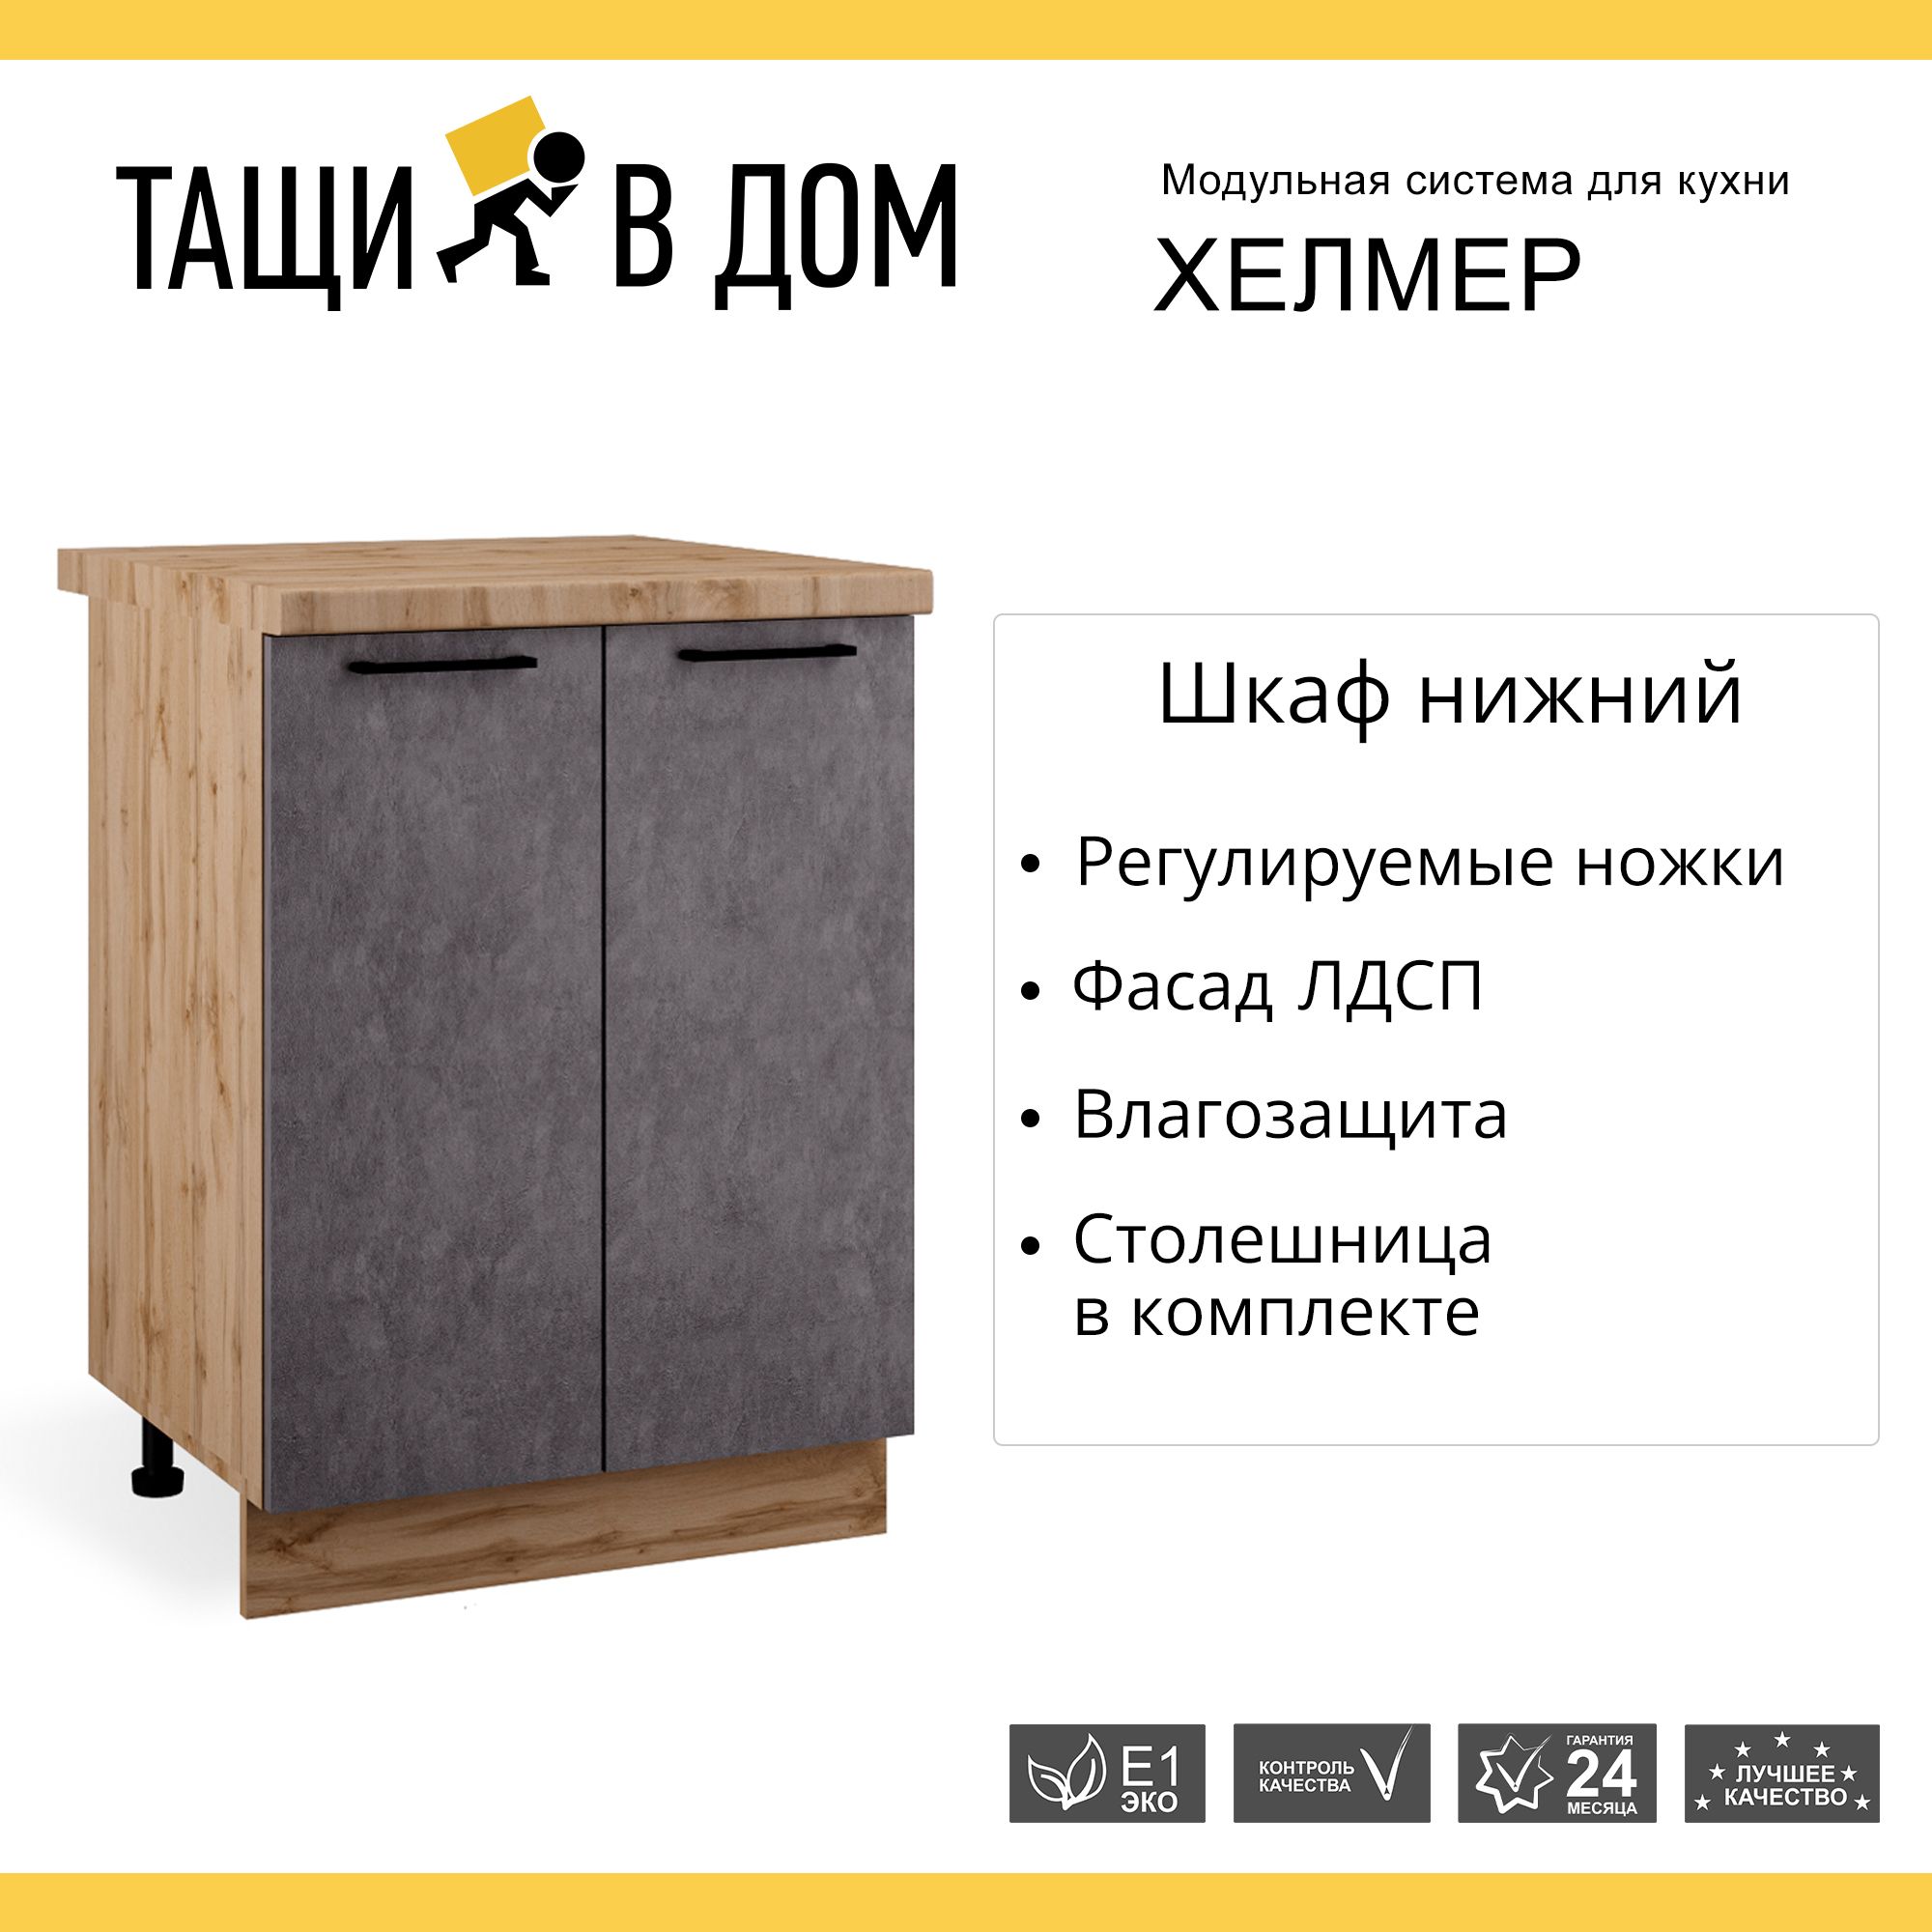 Кухонный модуль напольный Сурская мебель Хелмер, 60х84,2х60 см, 1 шт.